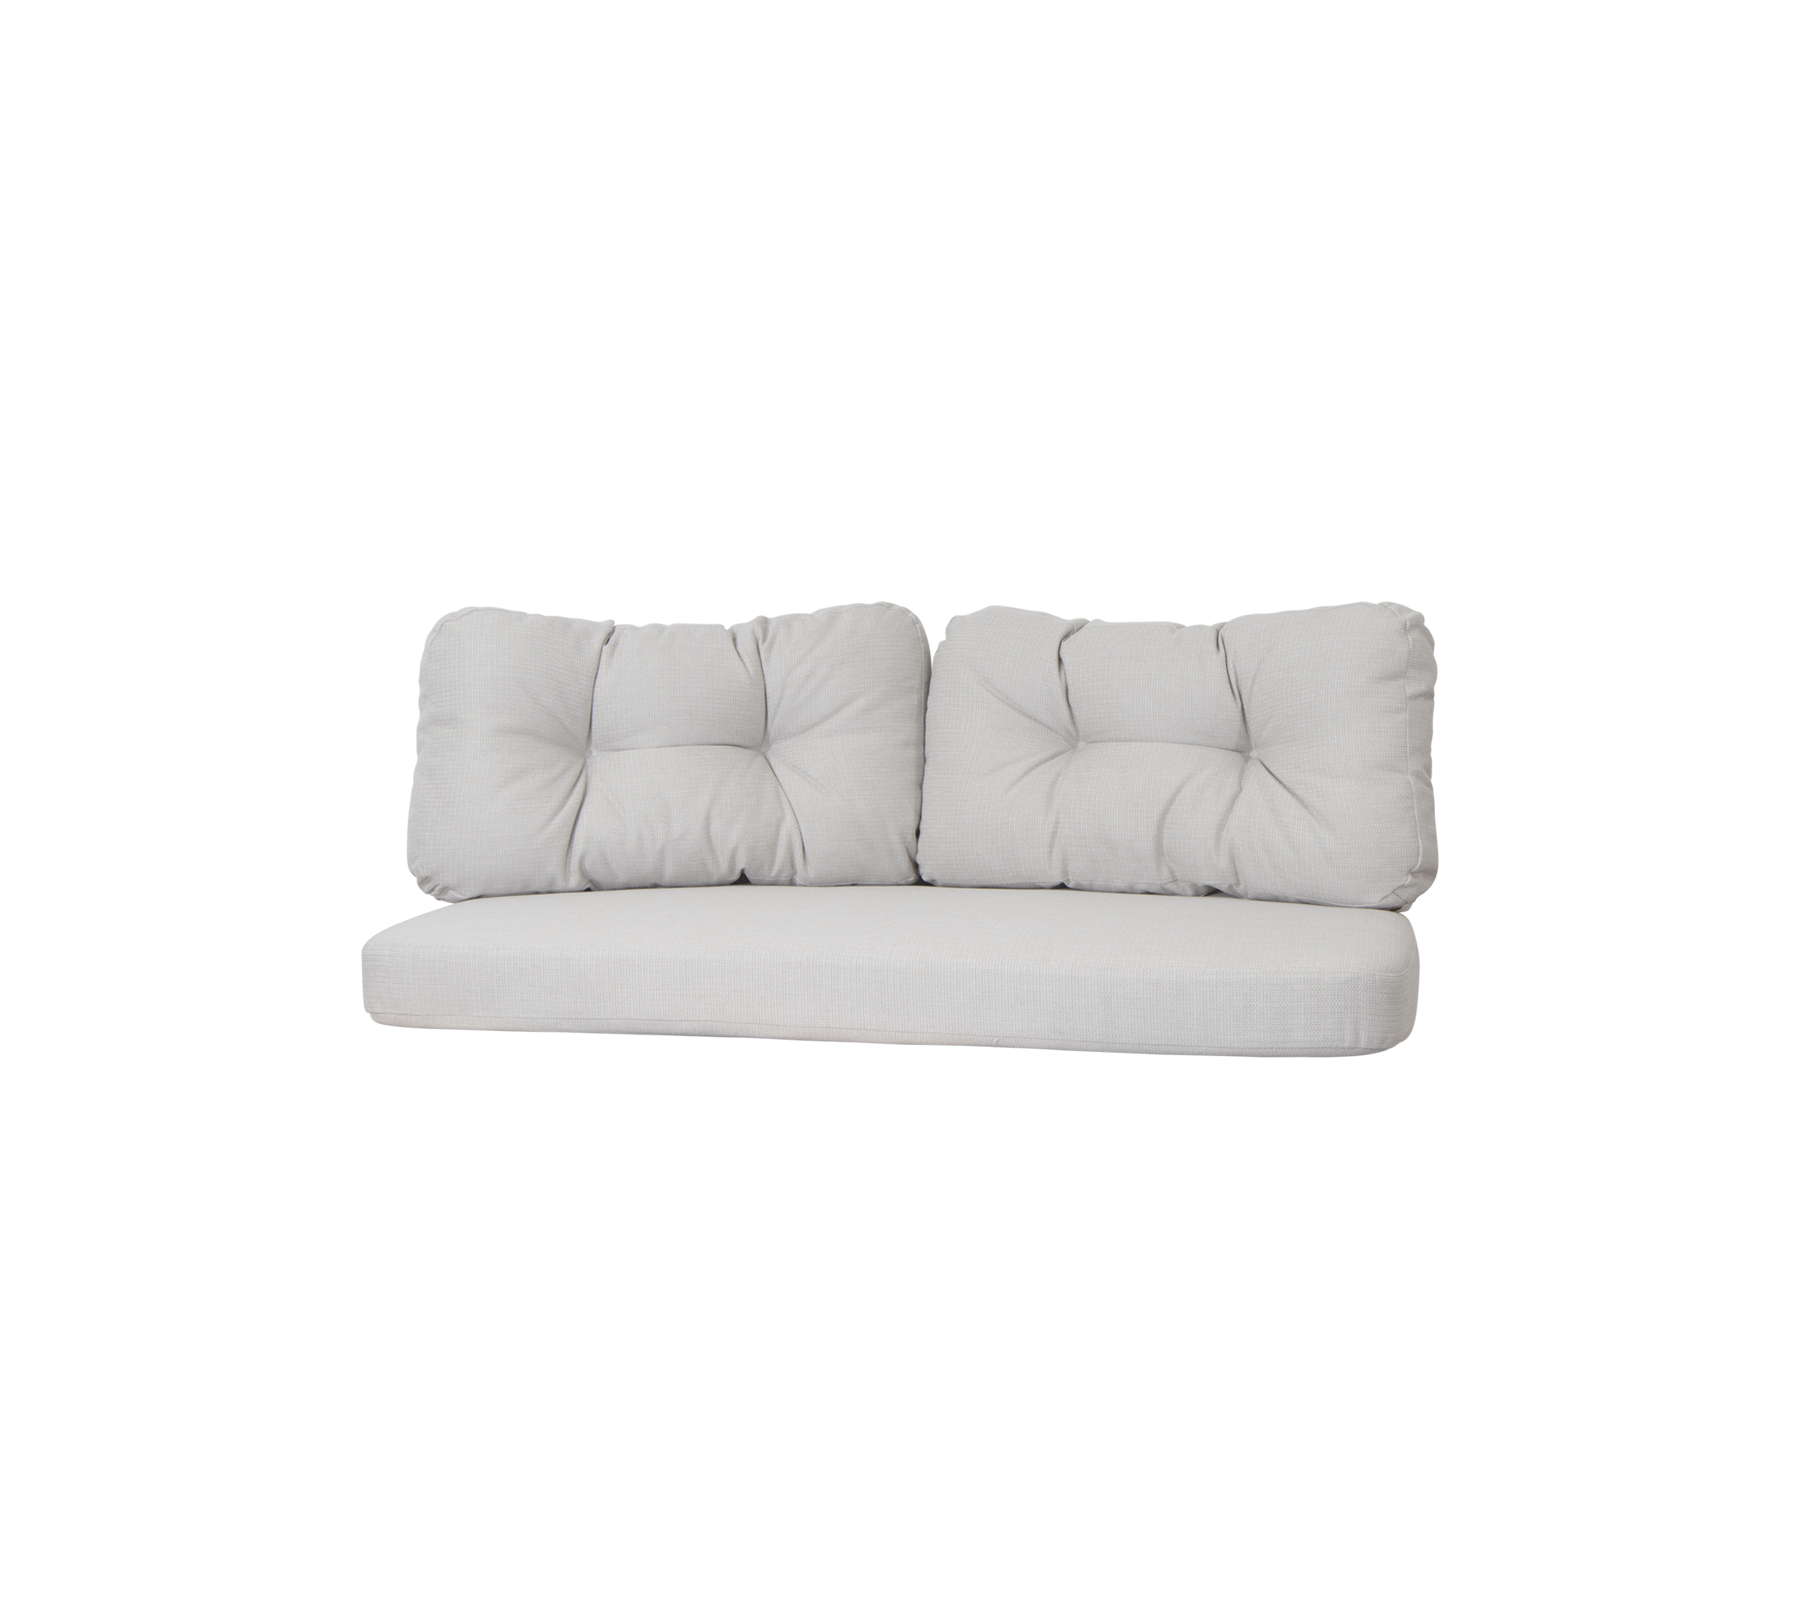 Cushion set, Ocean large 2-seater sofa